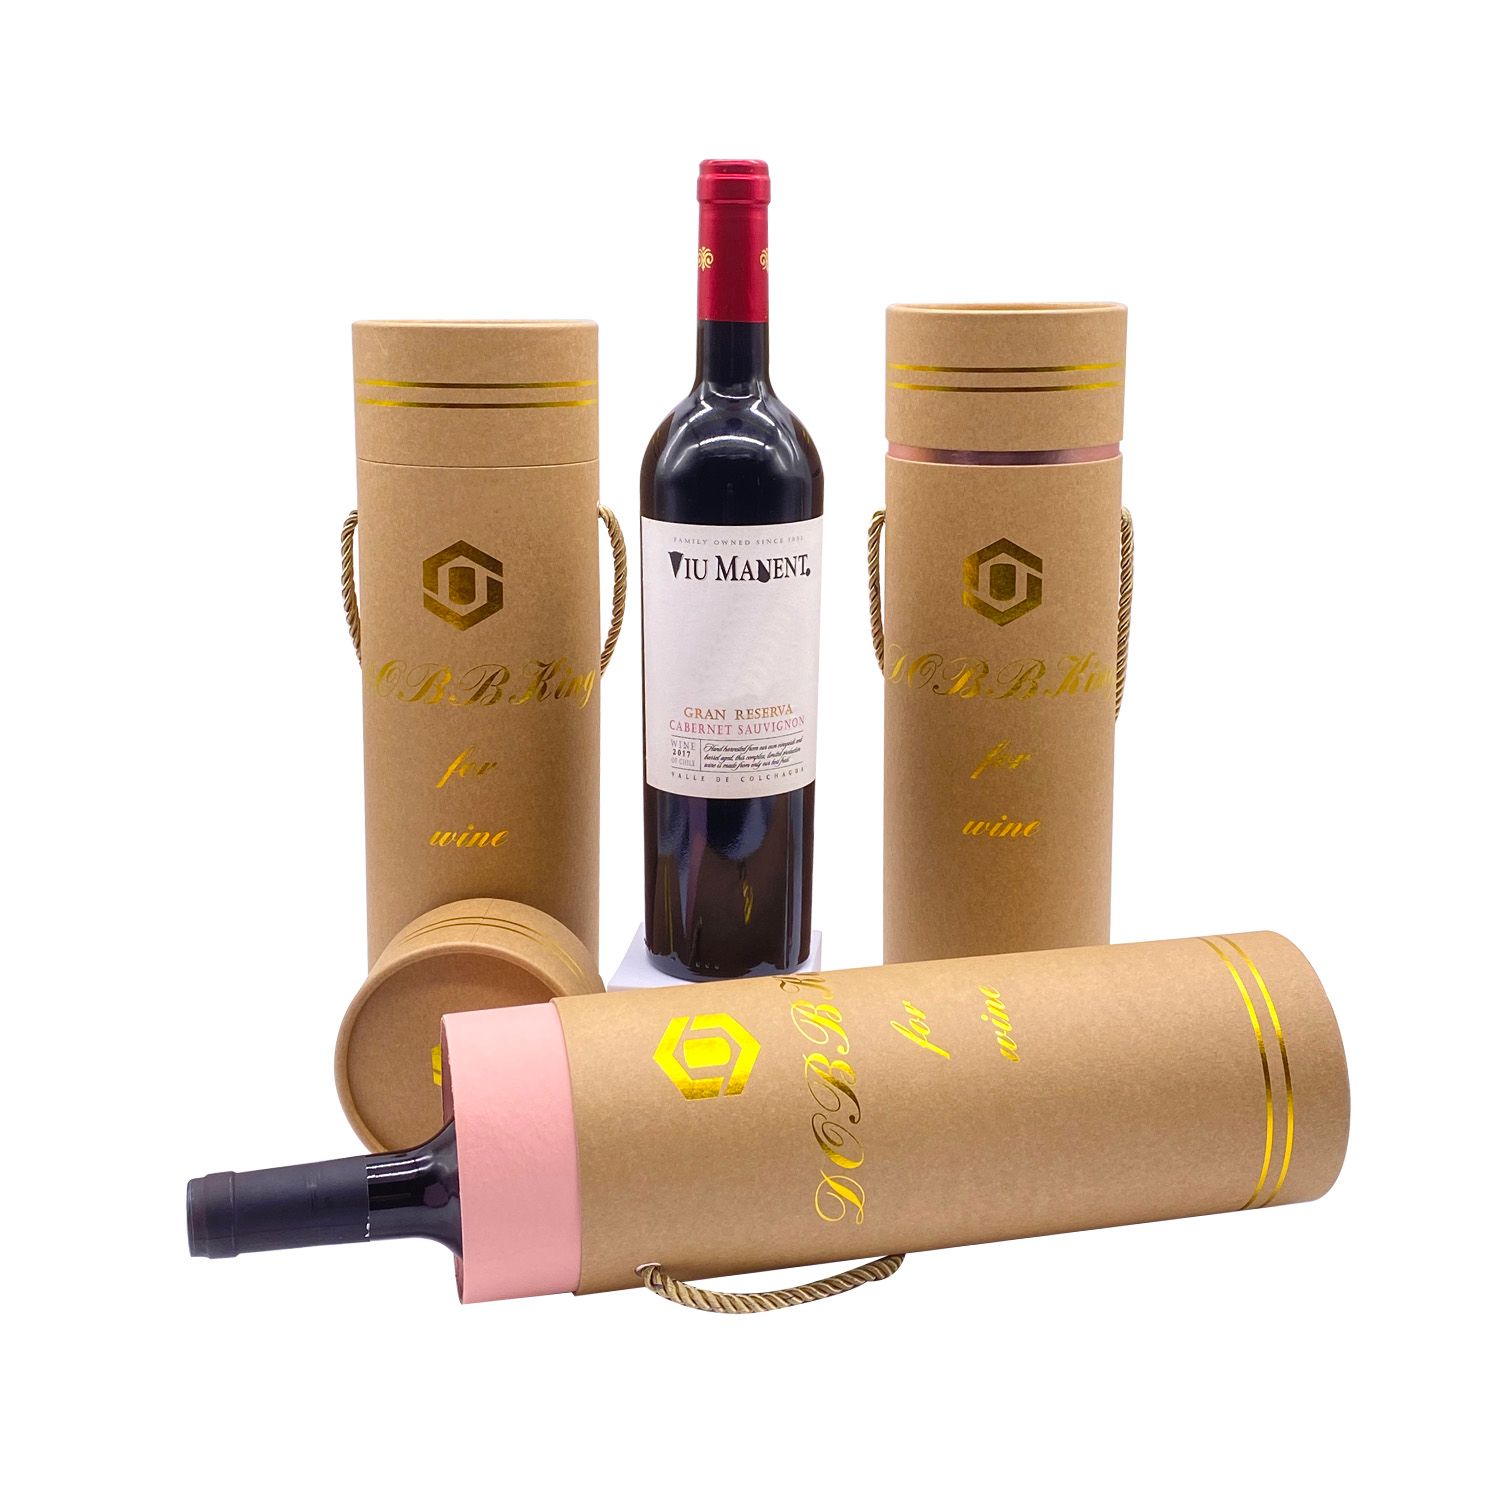 Custom cylinder kraft paper whisky beverage bottle cardboard tube for round wine packaging